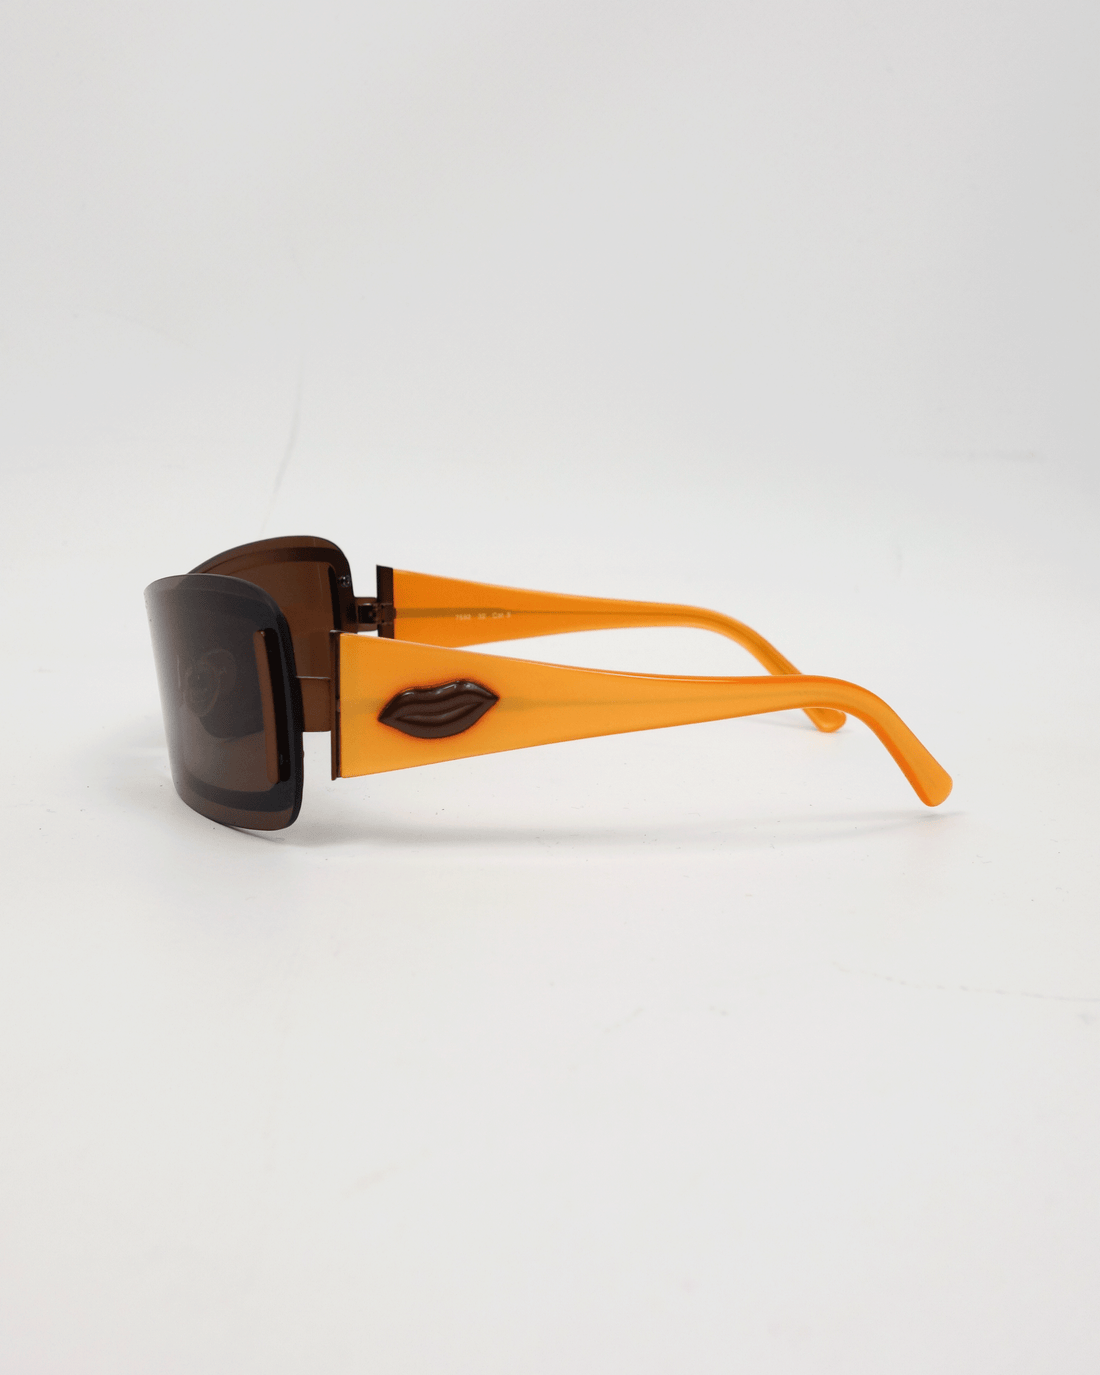 Sonia Rykiel Orange Mask Sunglasses 2000's